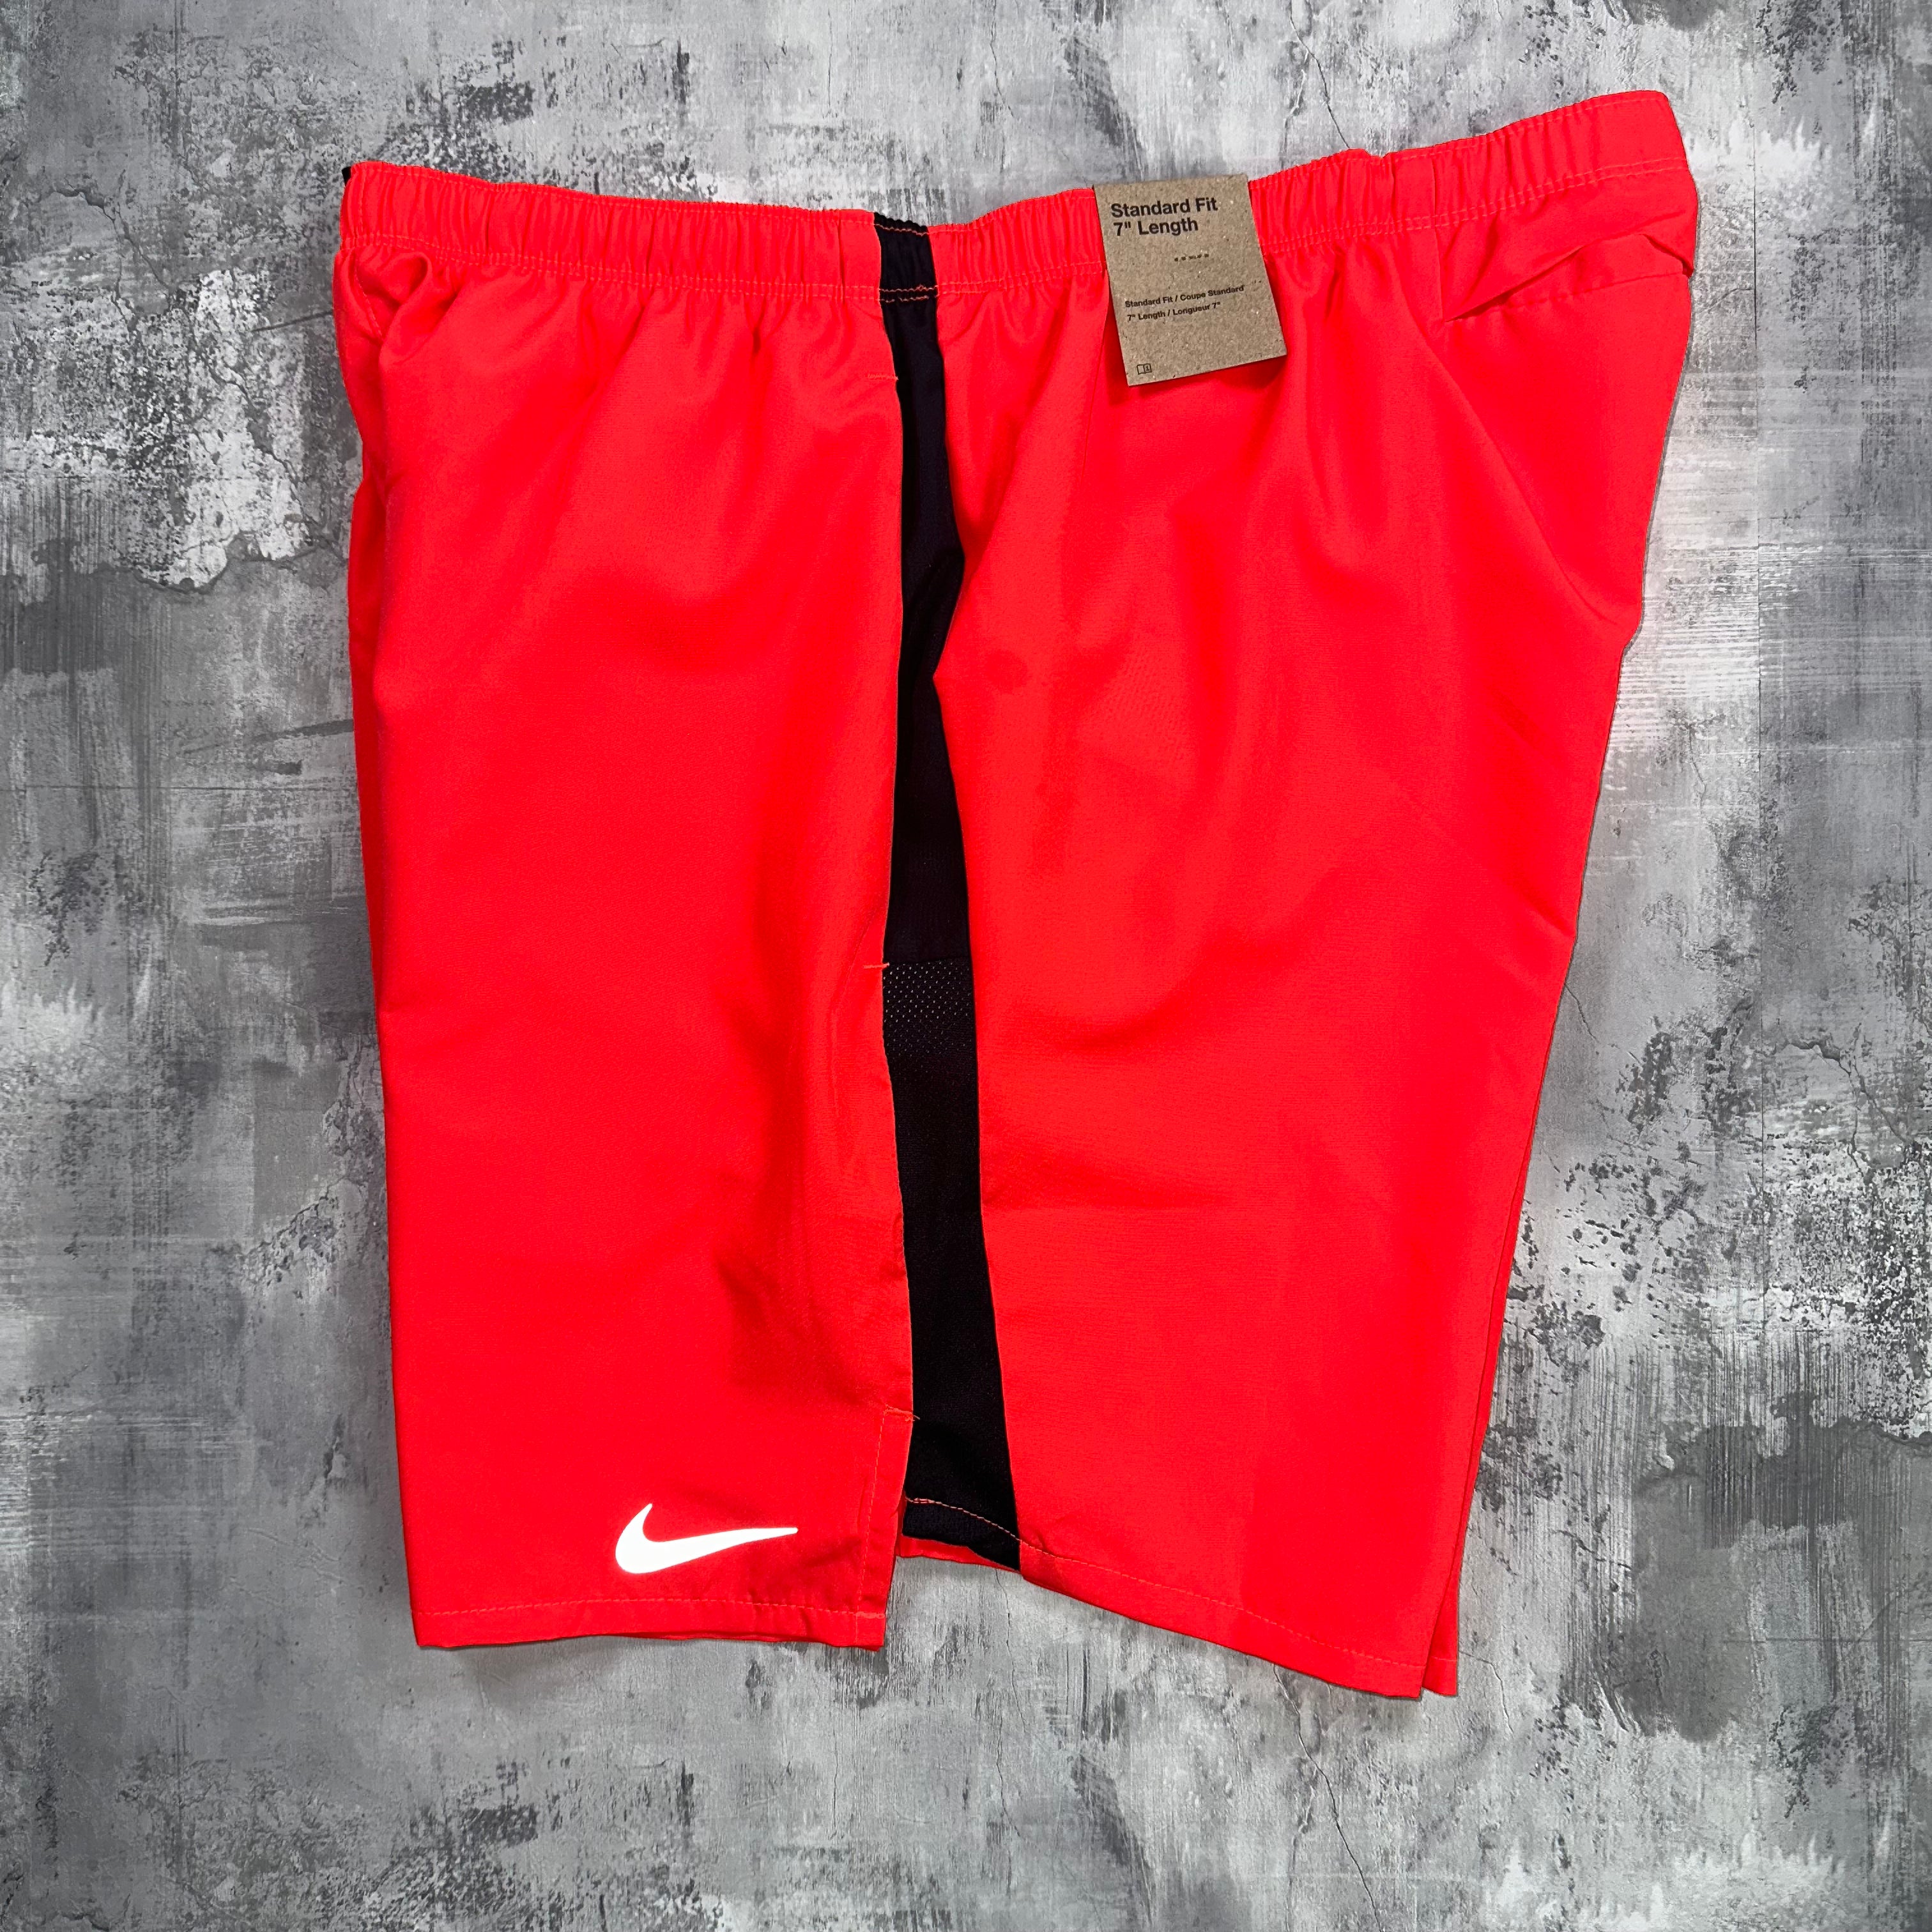 Nike Challenger shorts 7" Crimson